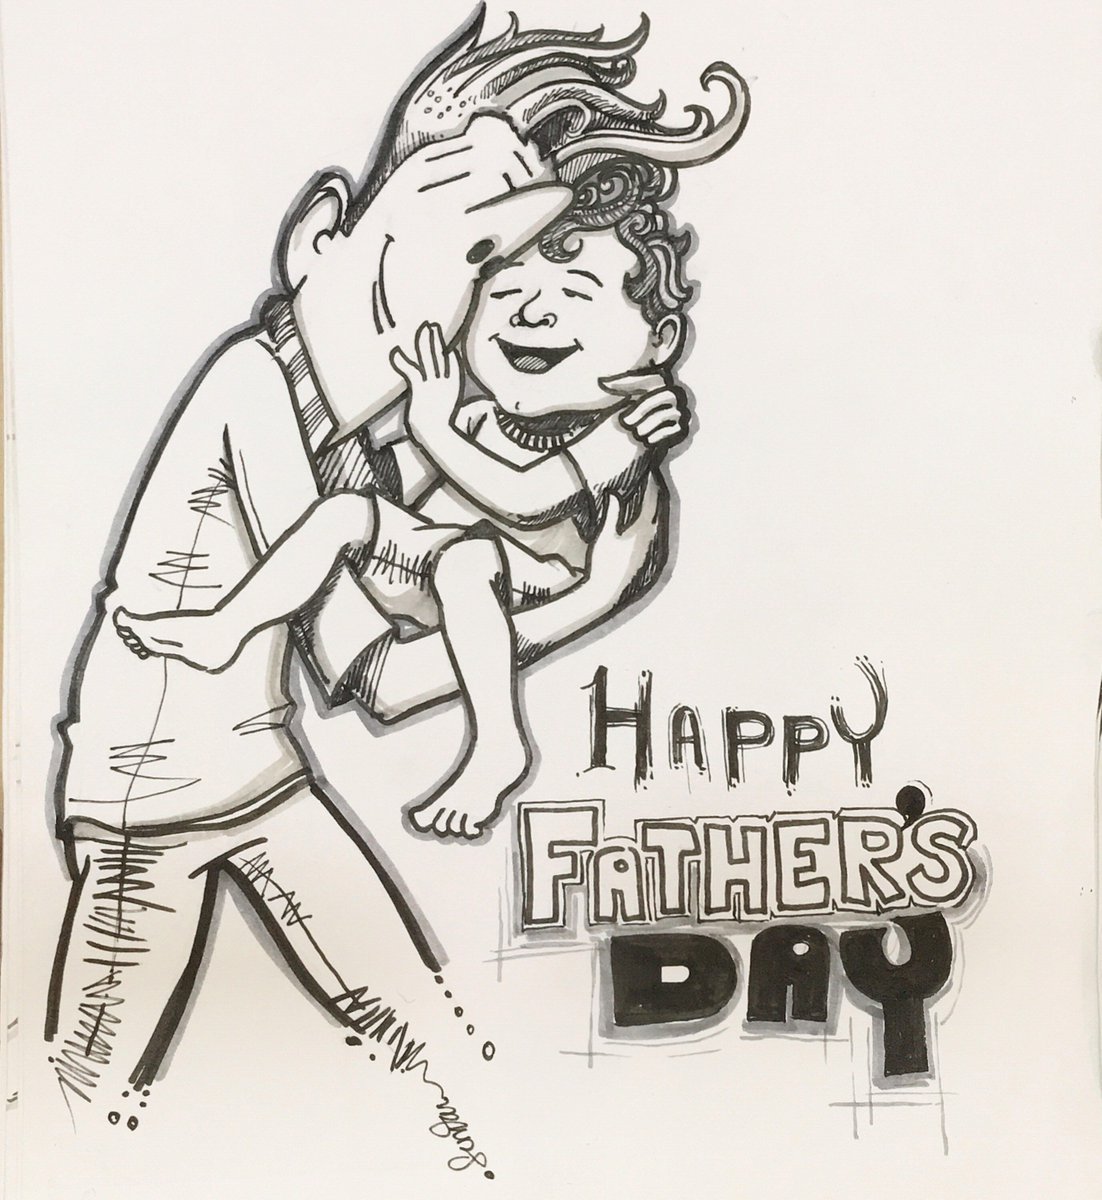 #HappyFathersDay #FathersDay #Art by @artsundar
 
#sketch #sketches #doodles #drawing #visuals #thevizcom #sketching #doodling #pencilart